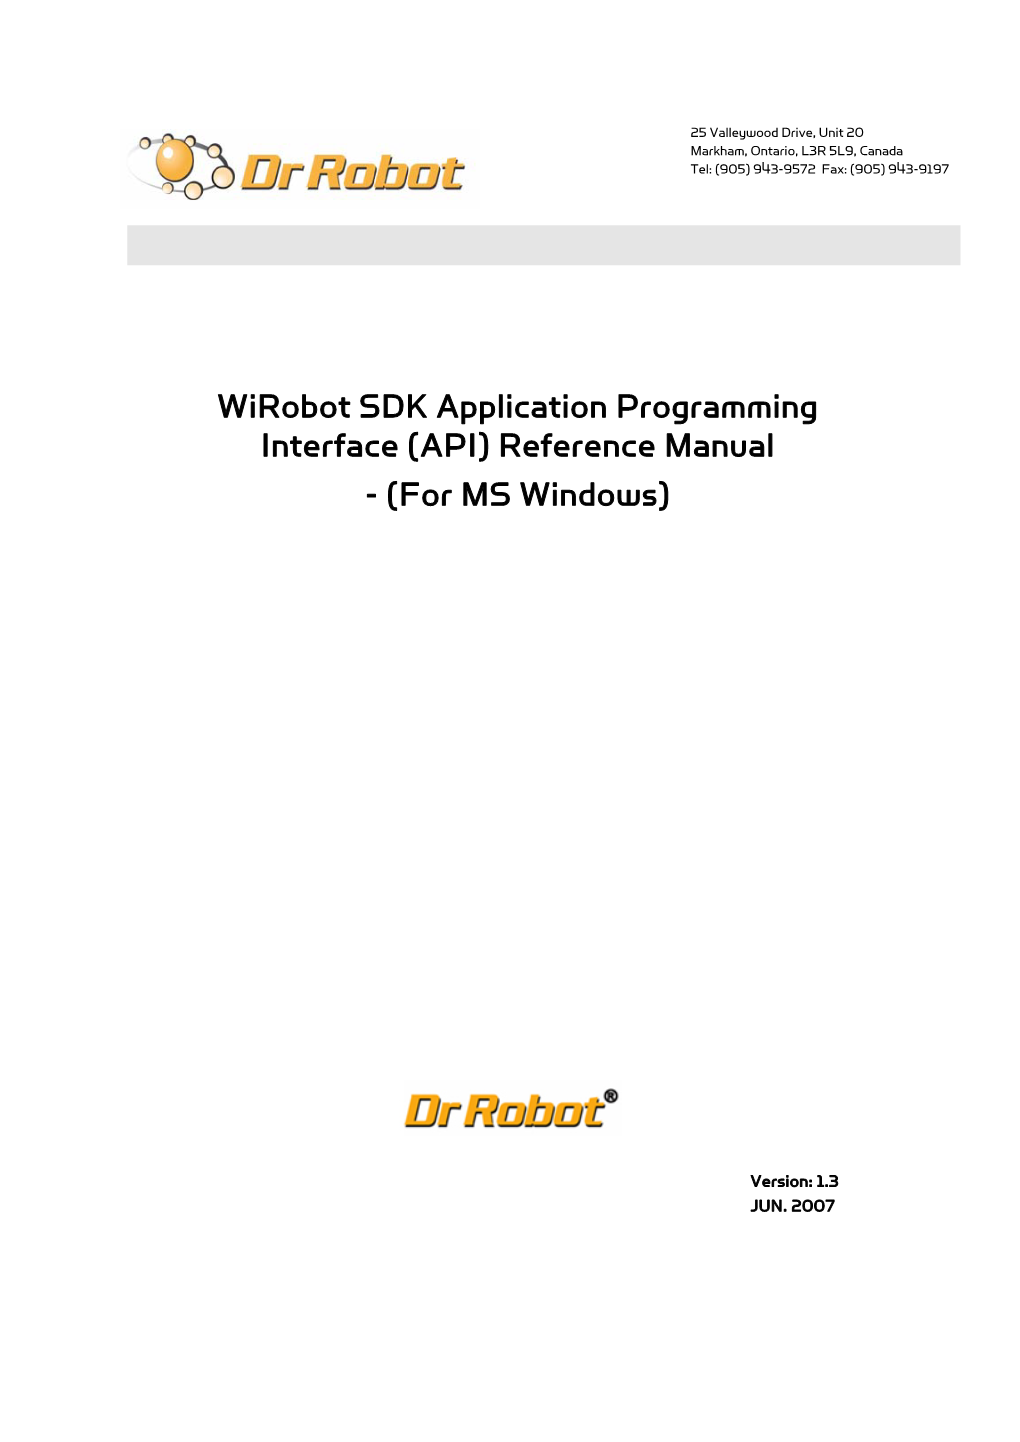 Wirobot SDK Application Programming Interface (API) Reference Manual - (For MS Windows)